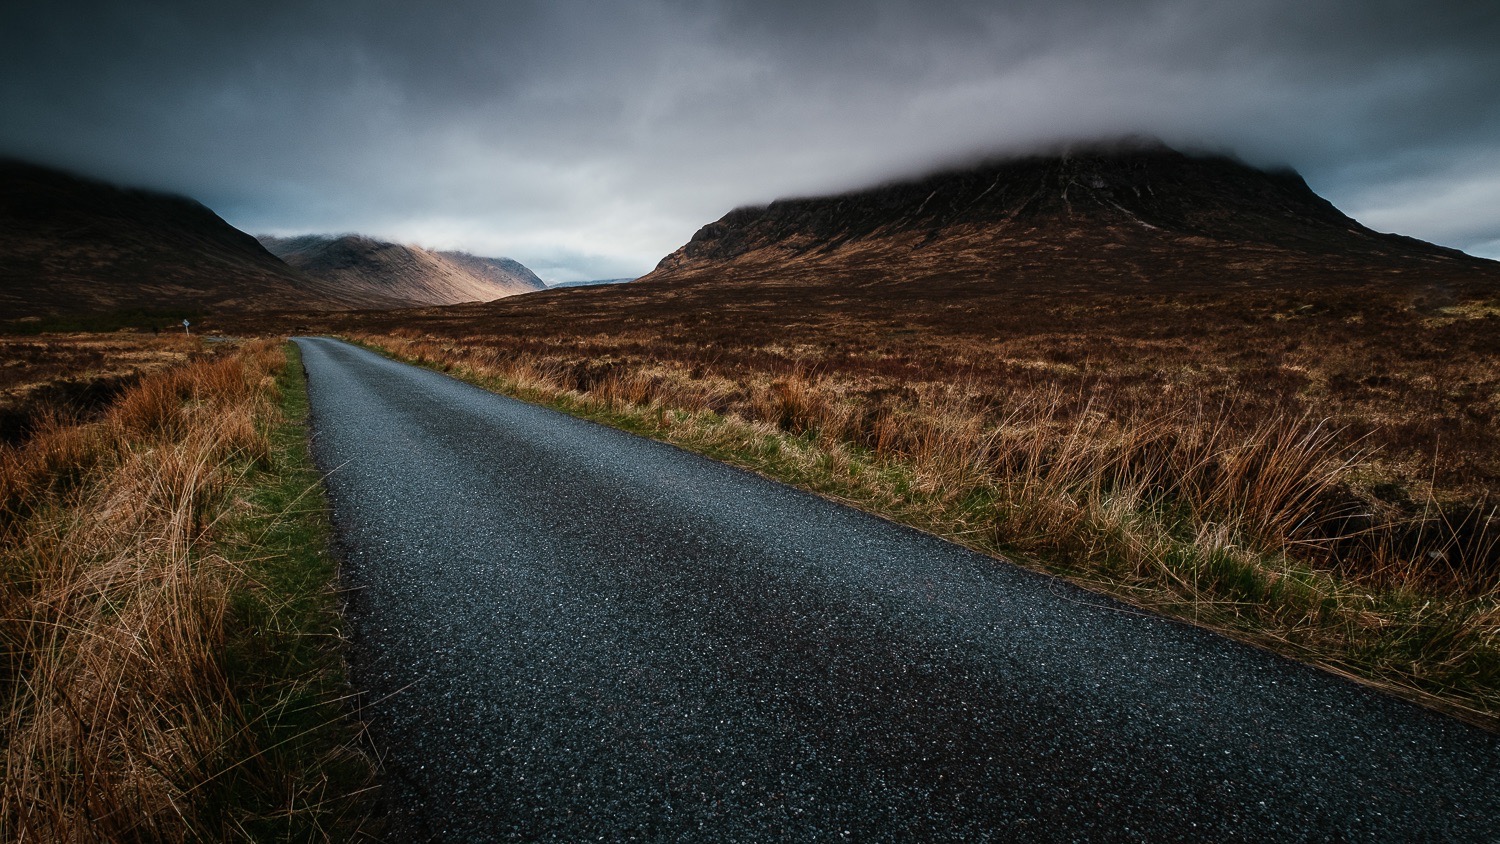 0019-scotland-tamron-le monde de la photo-paysage-20190508082956-compress.jpg